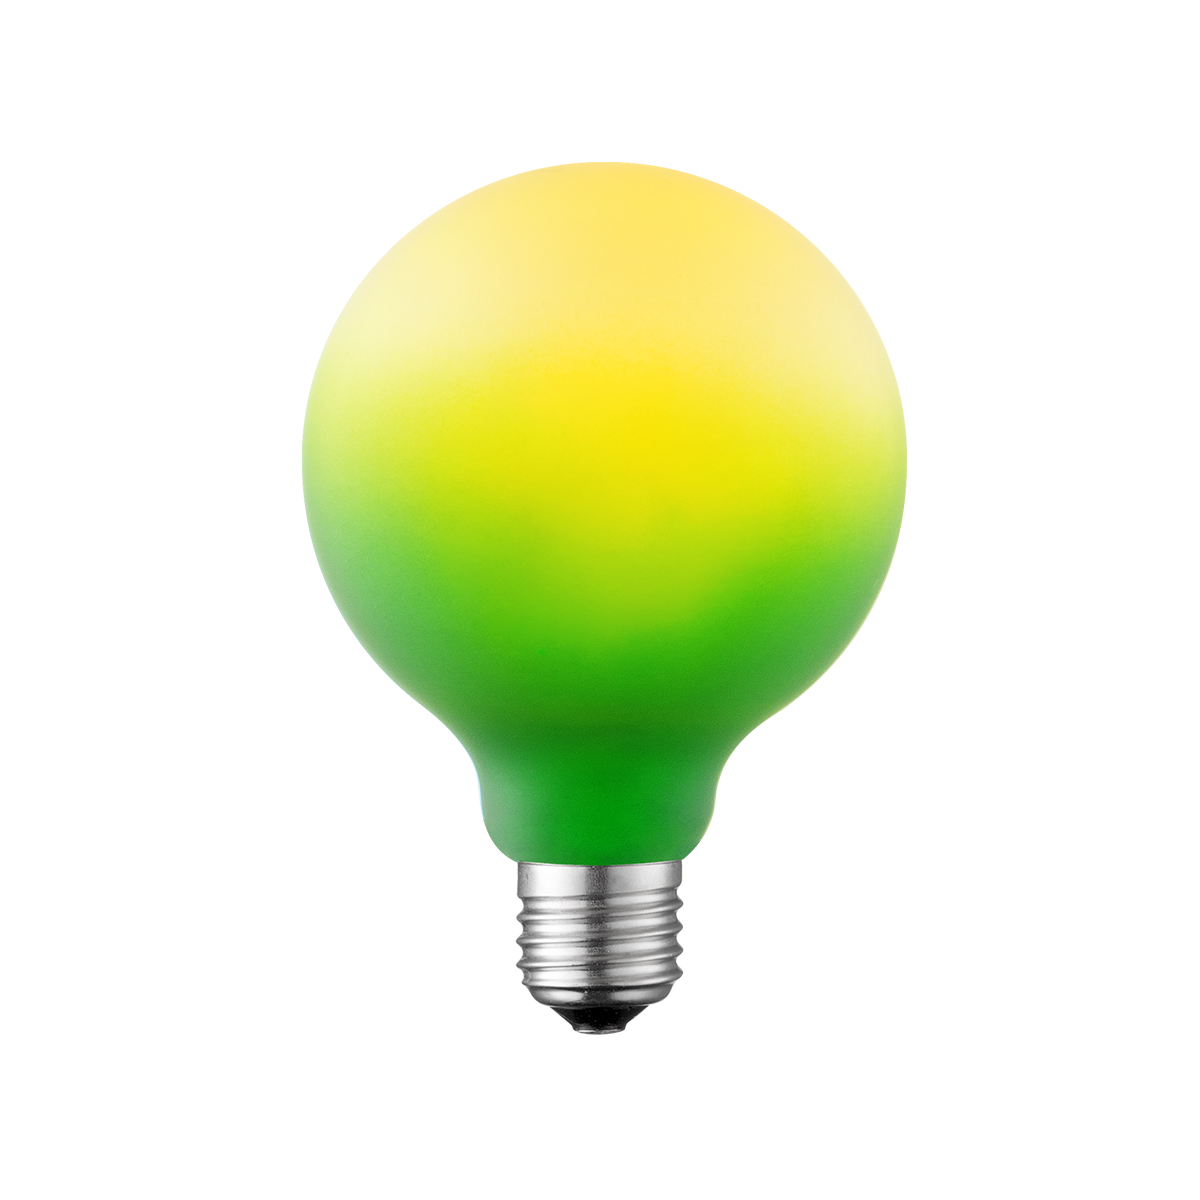 Tangla lighting - TLB-9005-04O - LED Light Bulb Single Spiral filament - G125 4W gradient green opal - non dimmable - E27